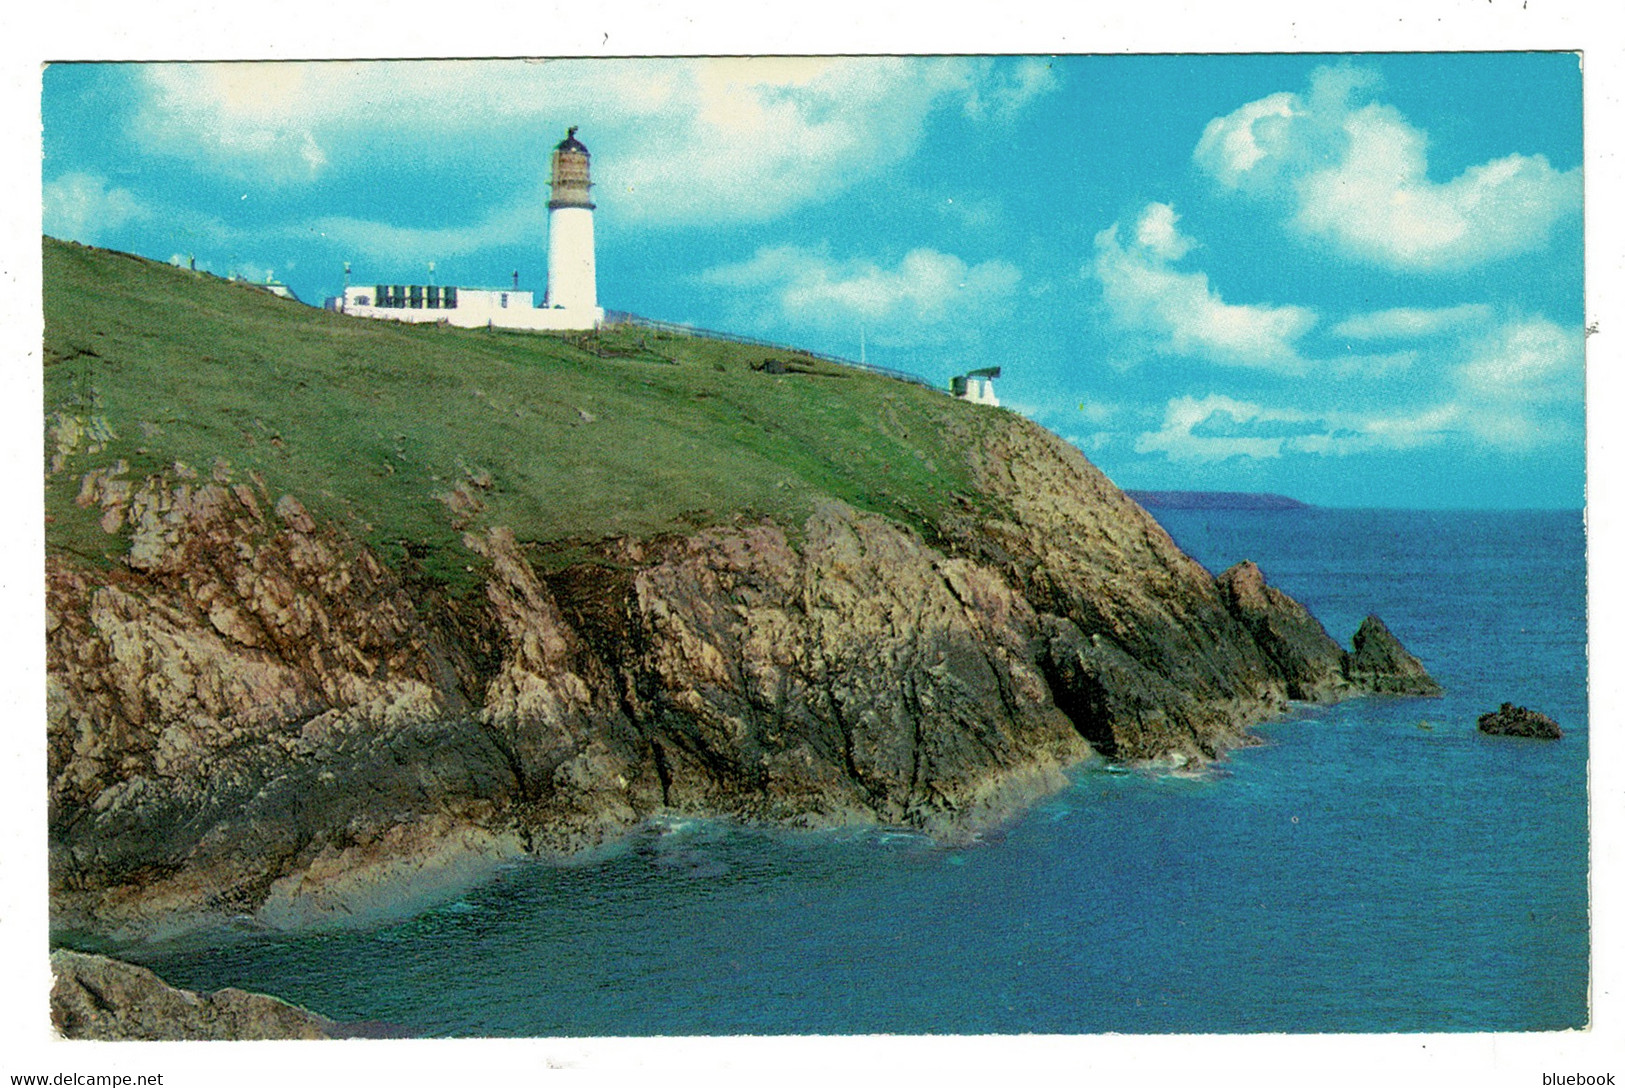 Ref 1433 - 1977 Postcard - Tiumpan Head Lighthouse - Stornoway Isle Of Lewis - Scotland - Lighthouses